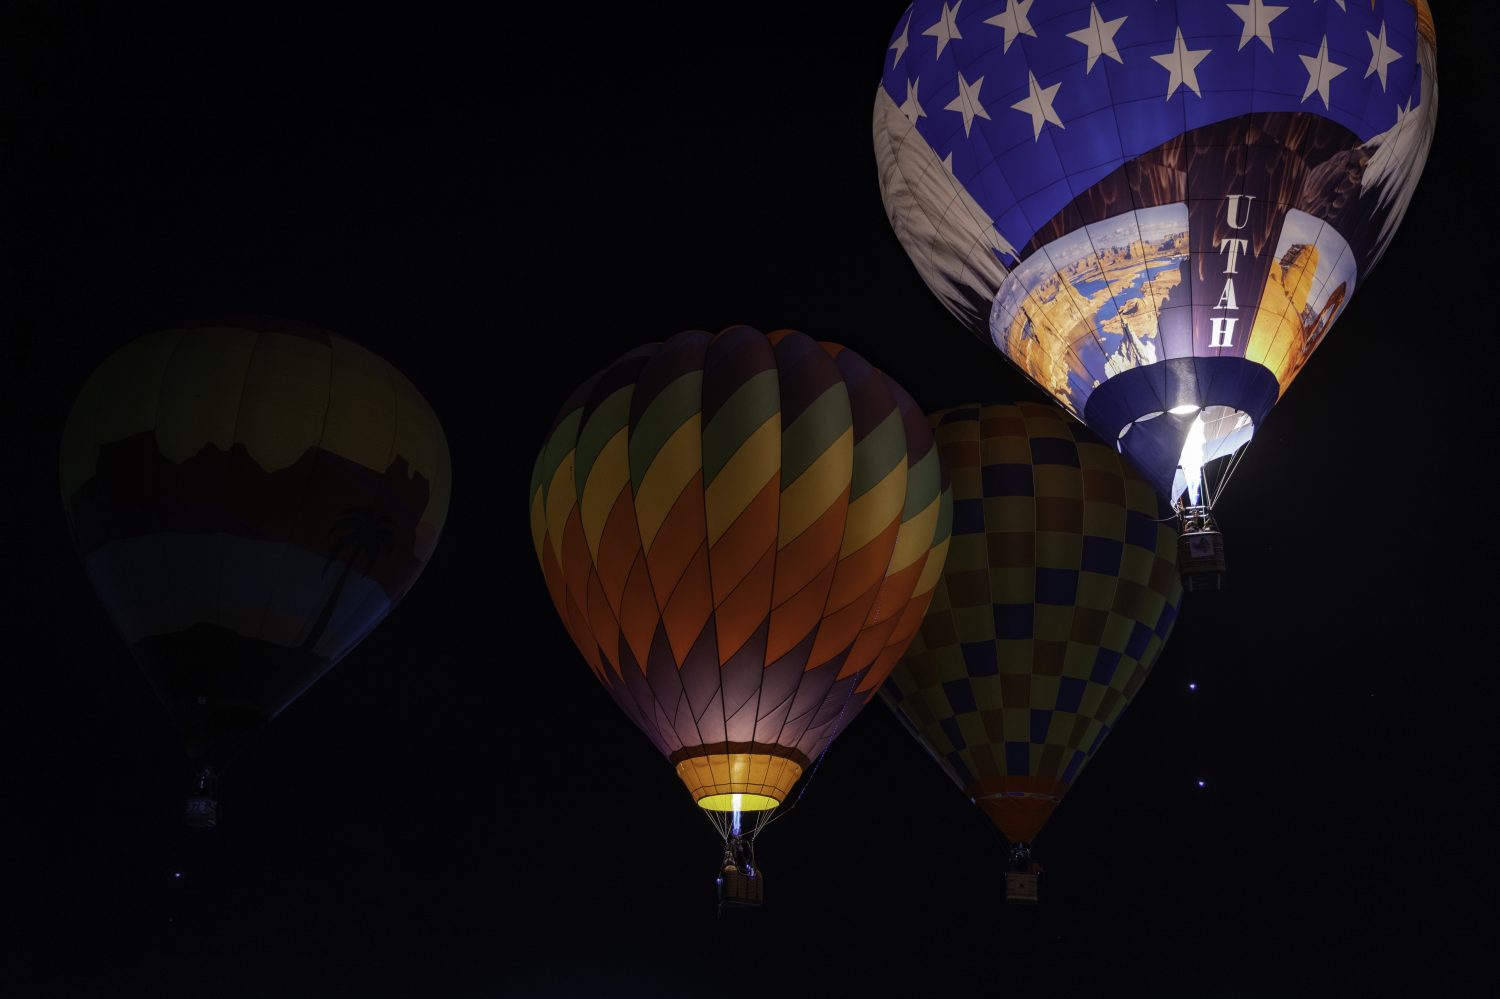 Dawn Patrol at Balloon Fiesta